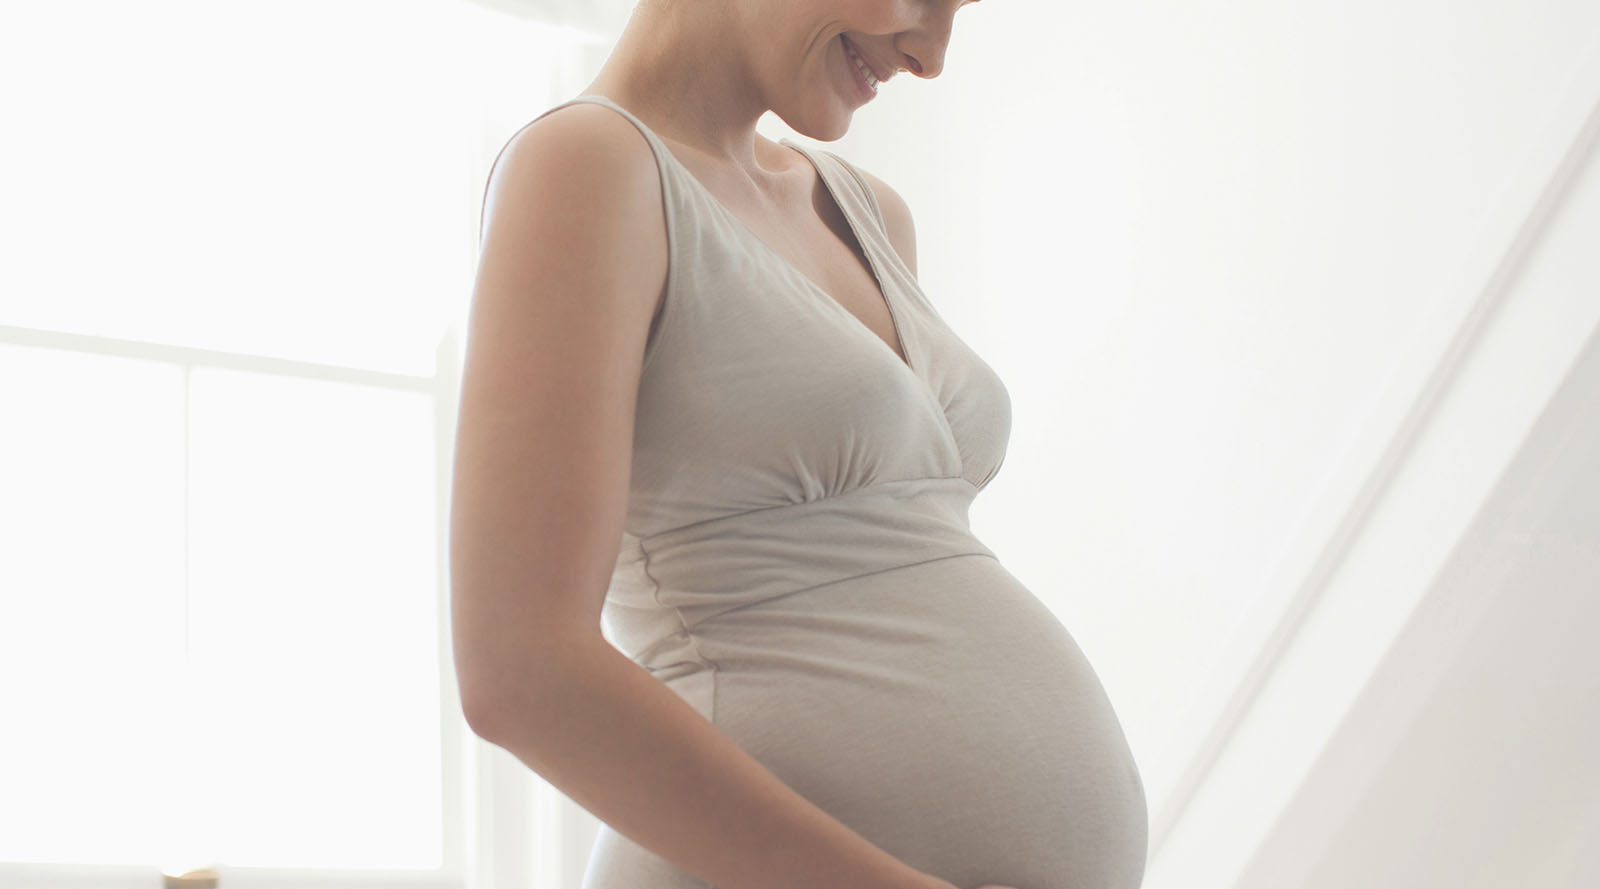 Importance of Prenatal Vitamins